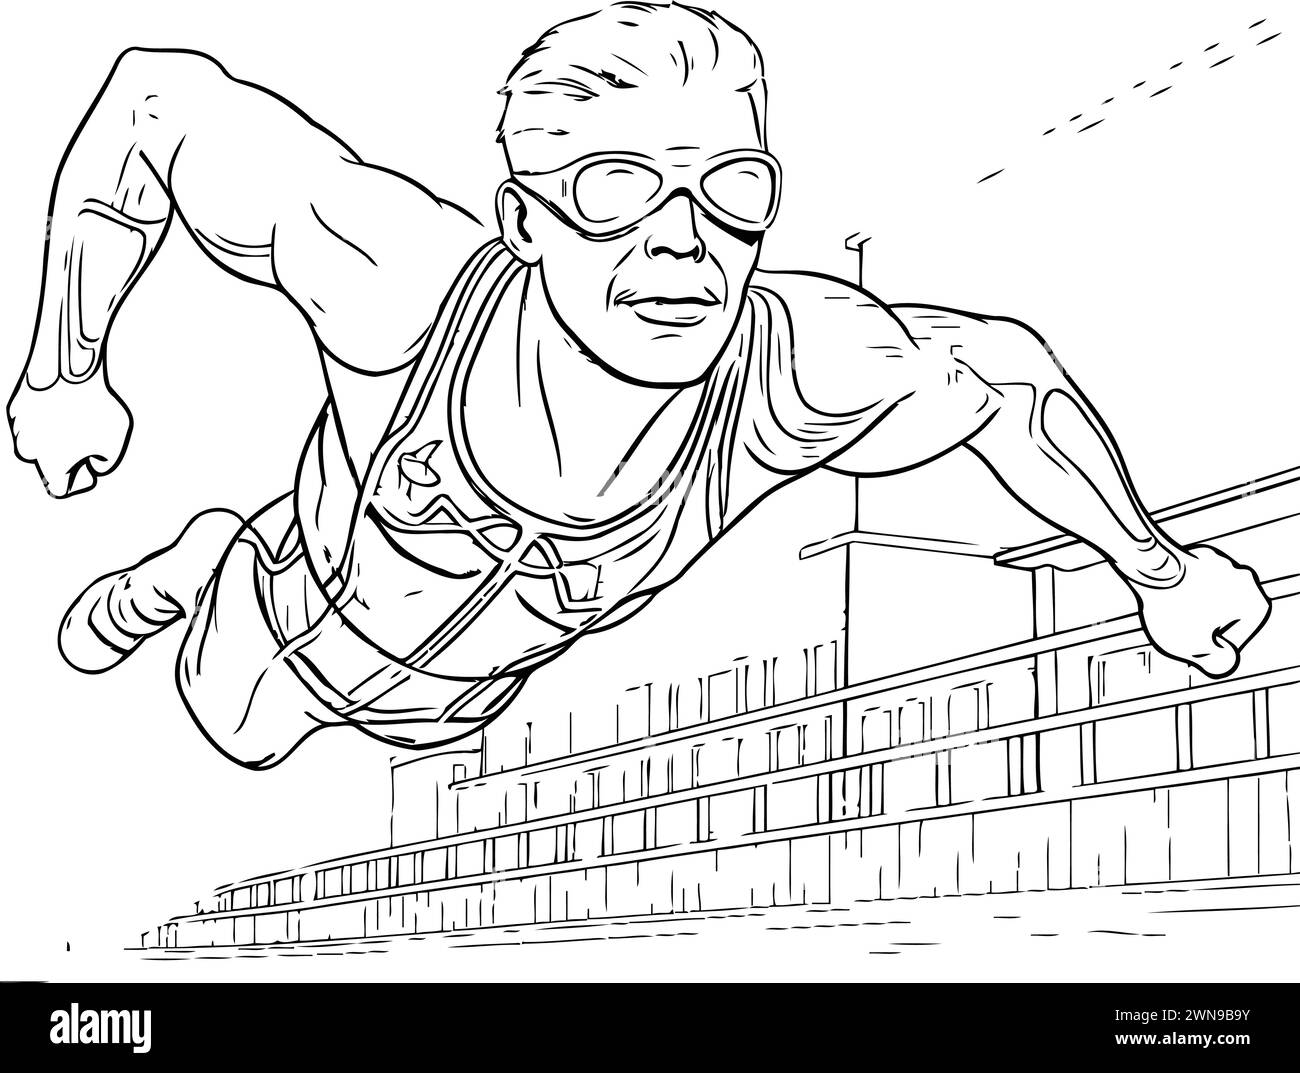 Cartoon style illustration of an old man superhero jumping over a skyscraper. Stock Vector